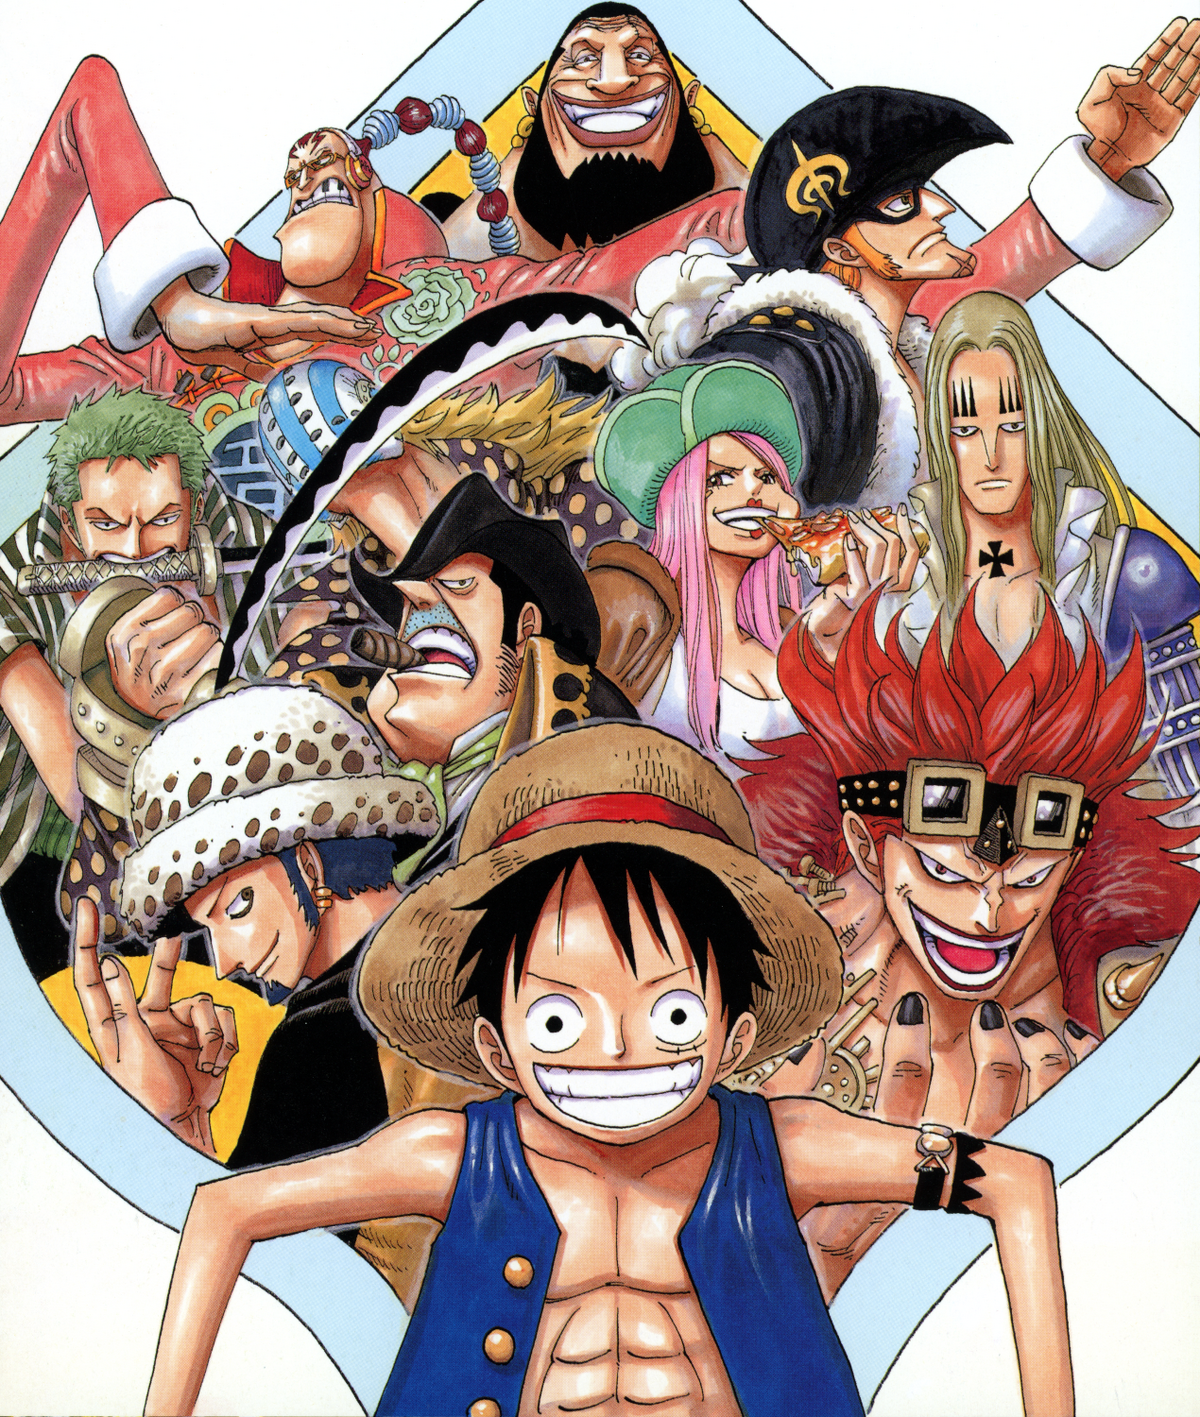 One Piece Anime Enters 'Zou' Arc on July 31 - News - Anime News Network